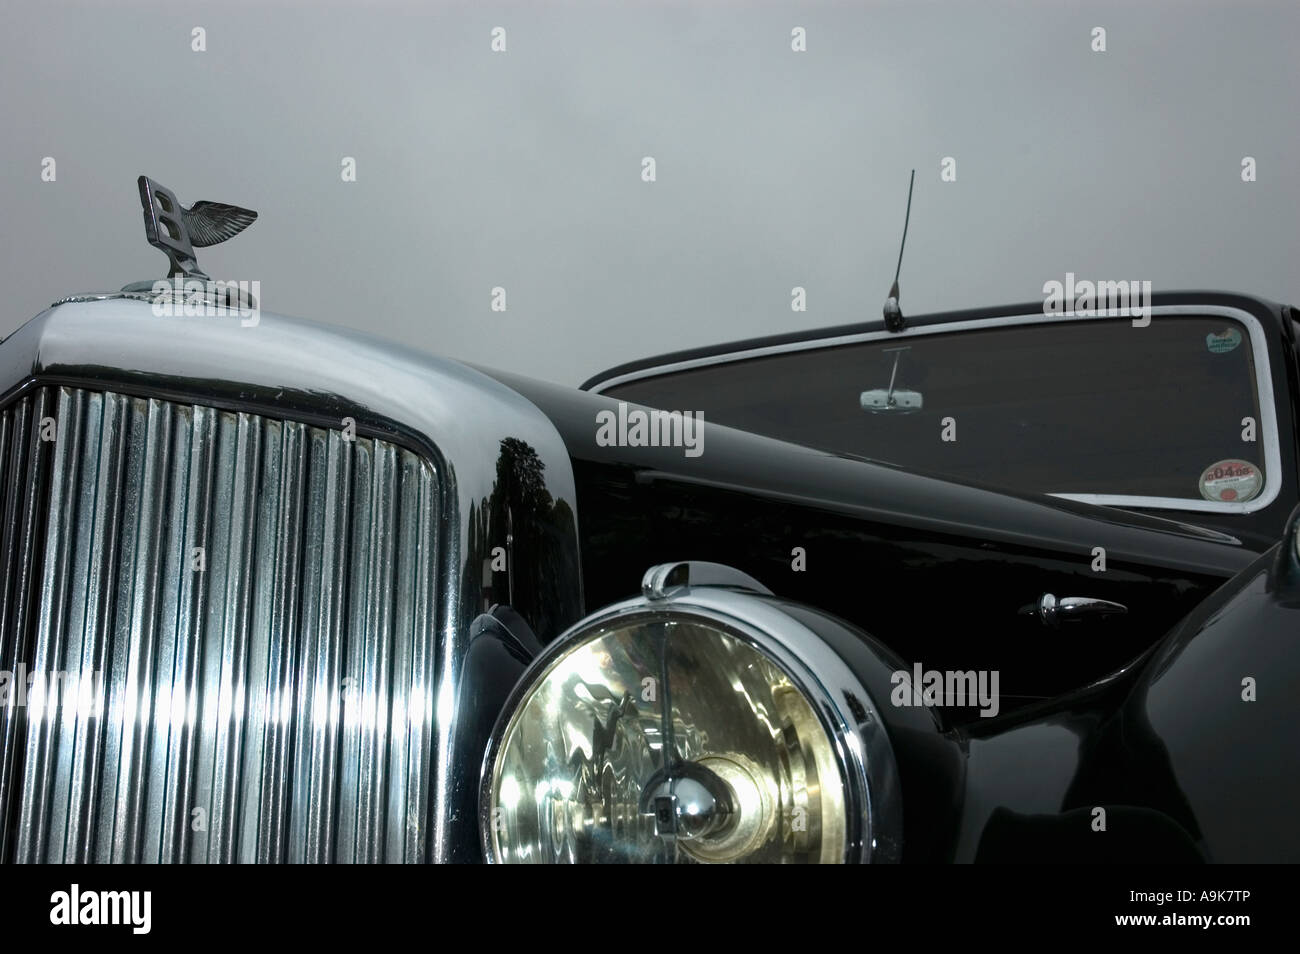 Close up detail of a black vintage Bentley car Stock Photo